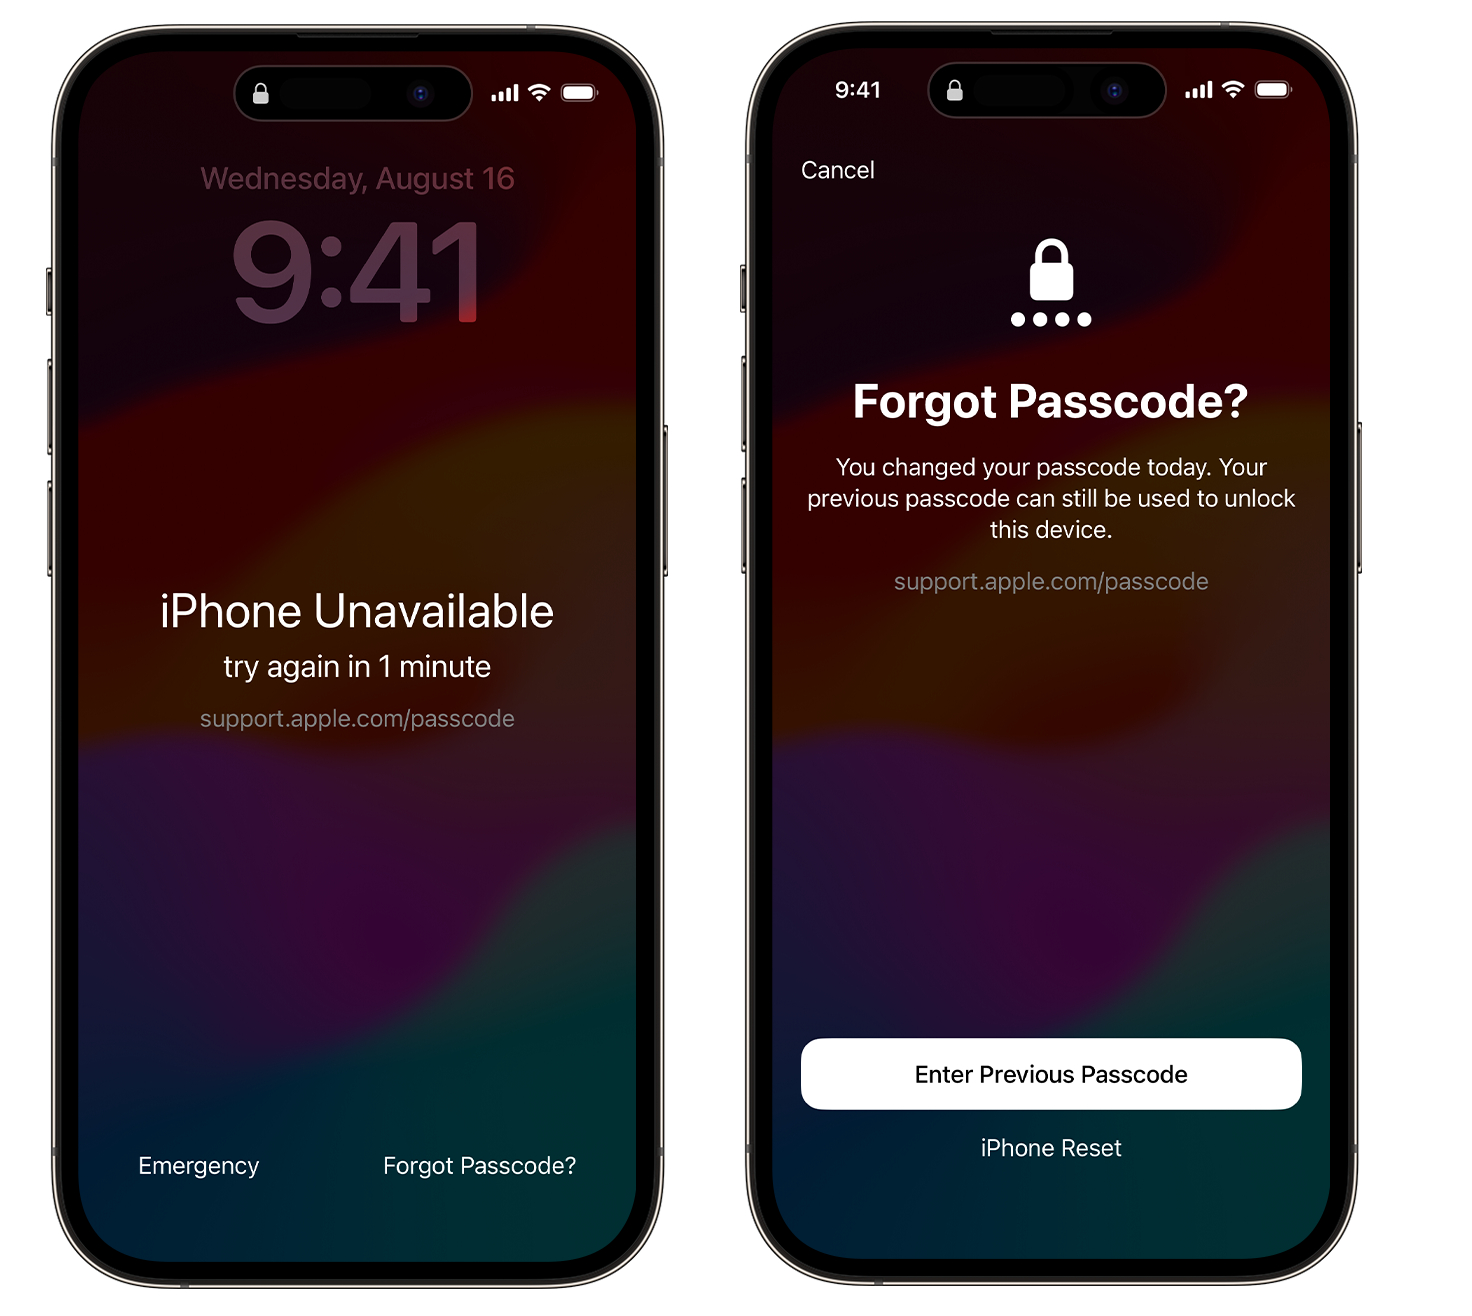 iphone忘記螢幕密碼怎麼辦，3種免電腦解鎖方法! - iPhone解鎖 - 敗家達人推薦